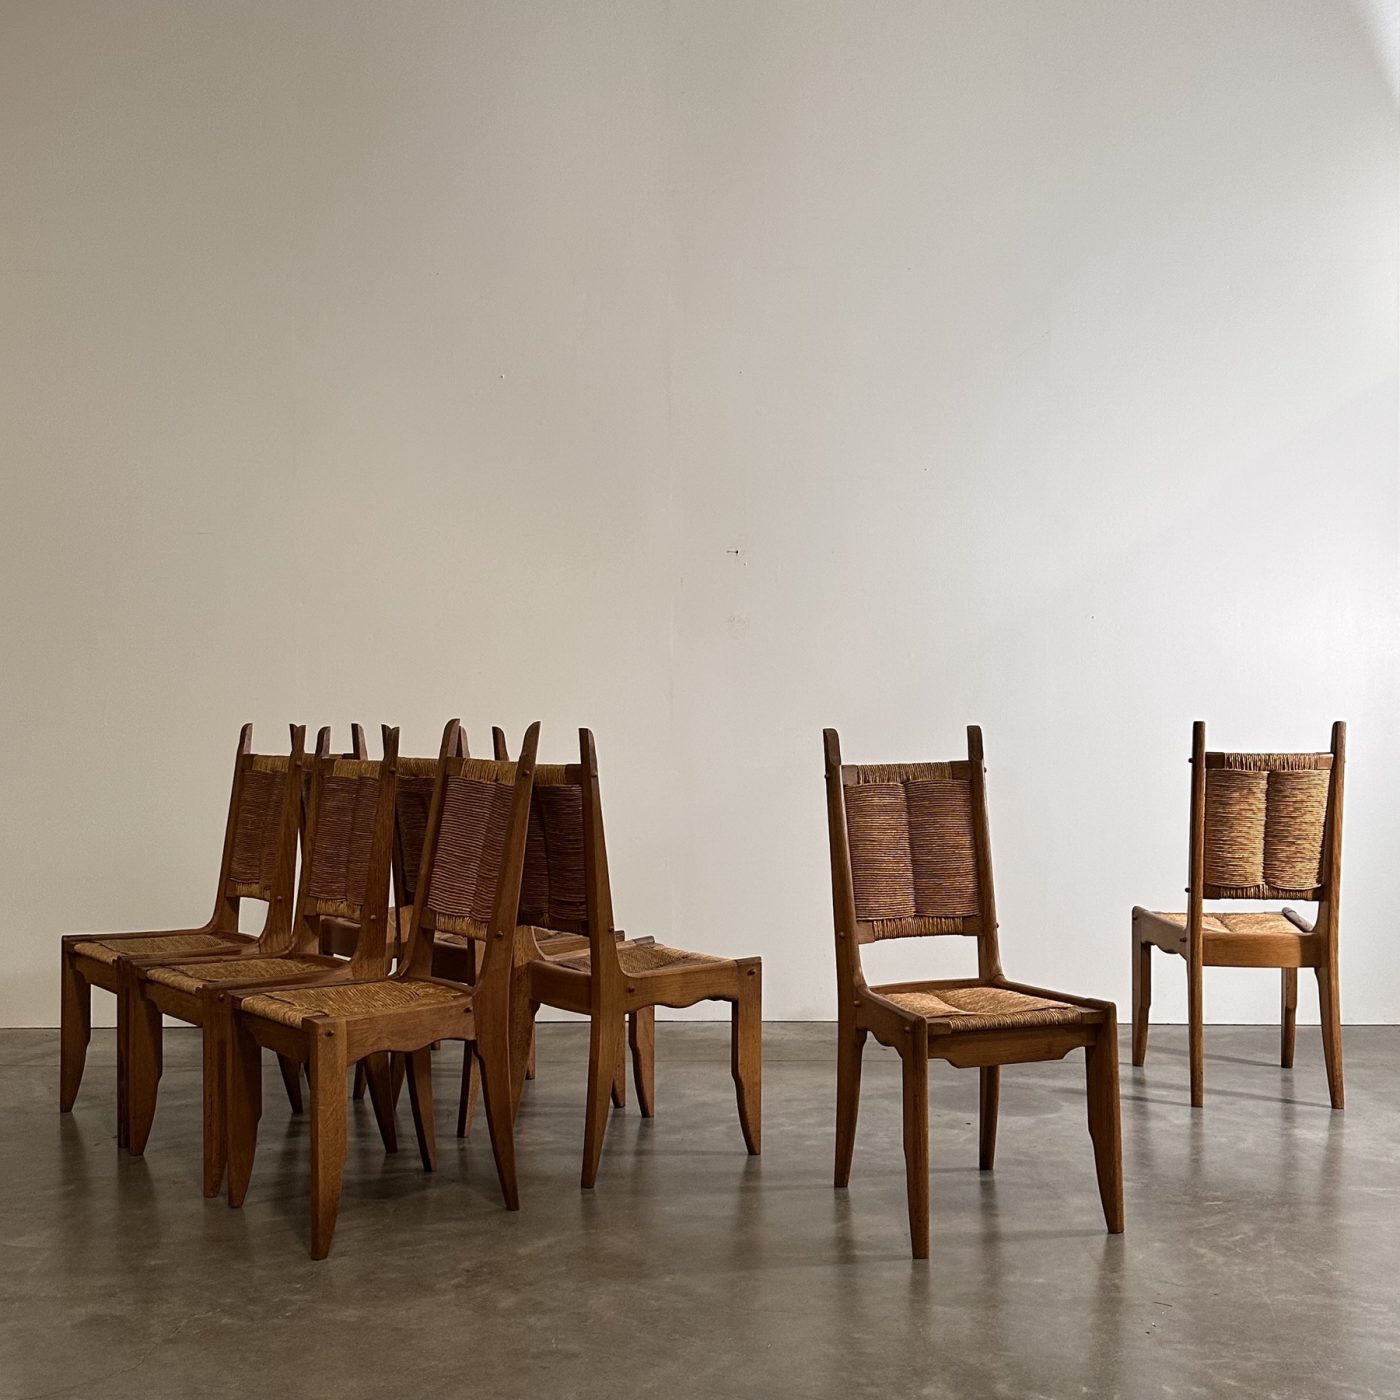 objet-vagabond-midcentury-chairs0006